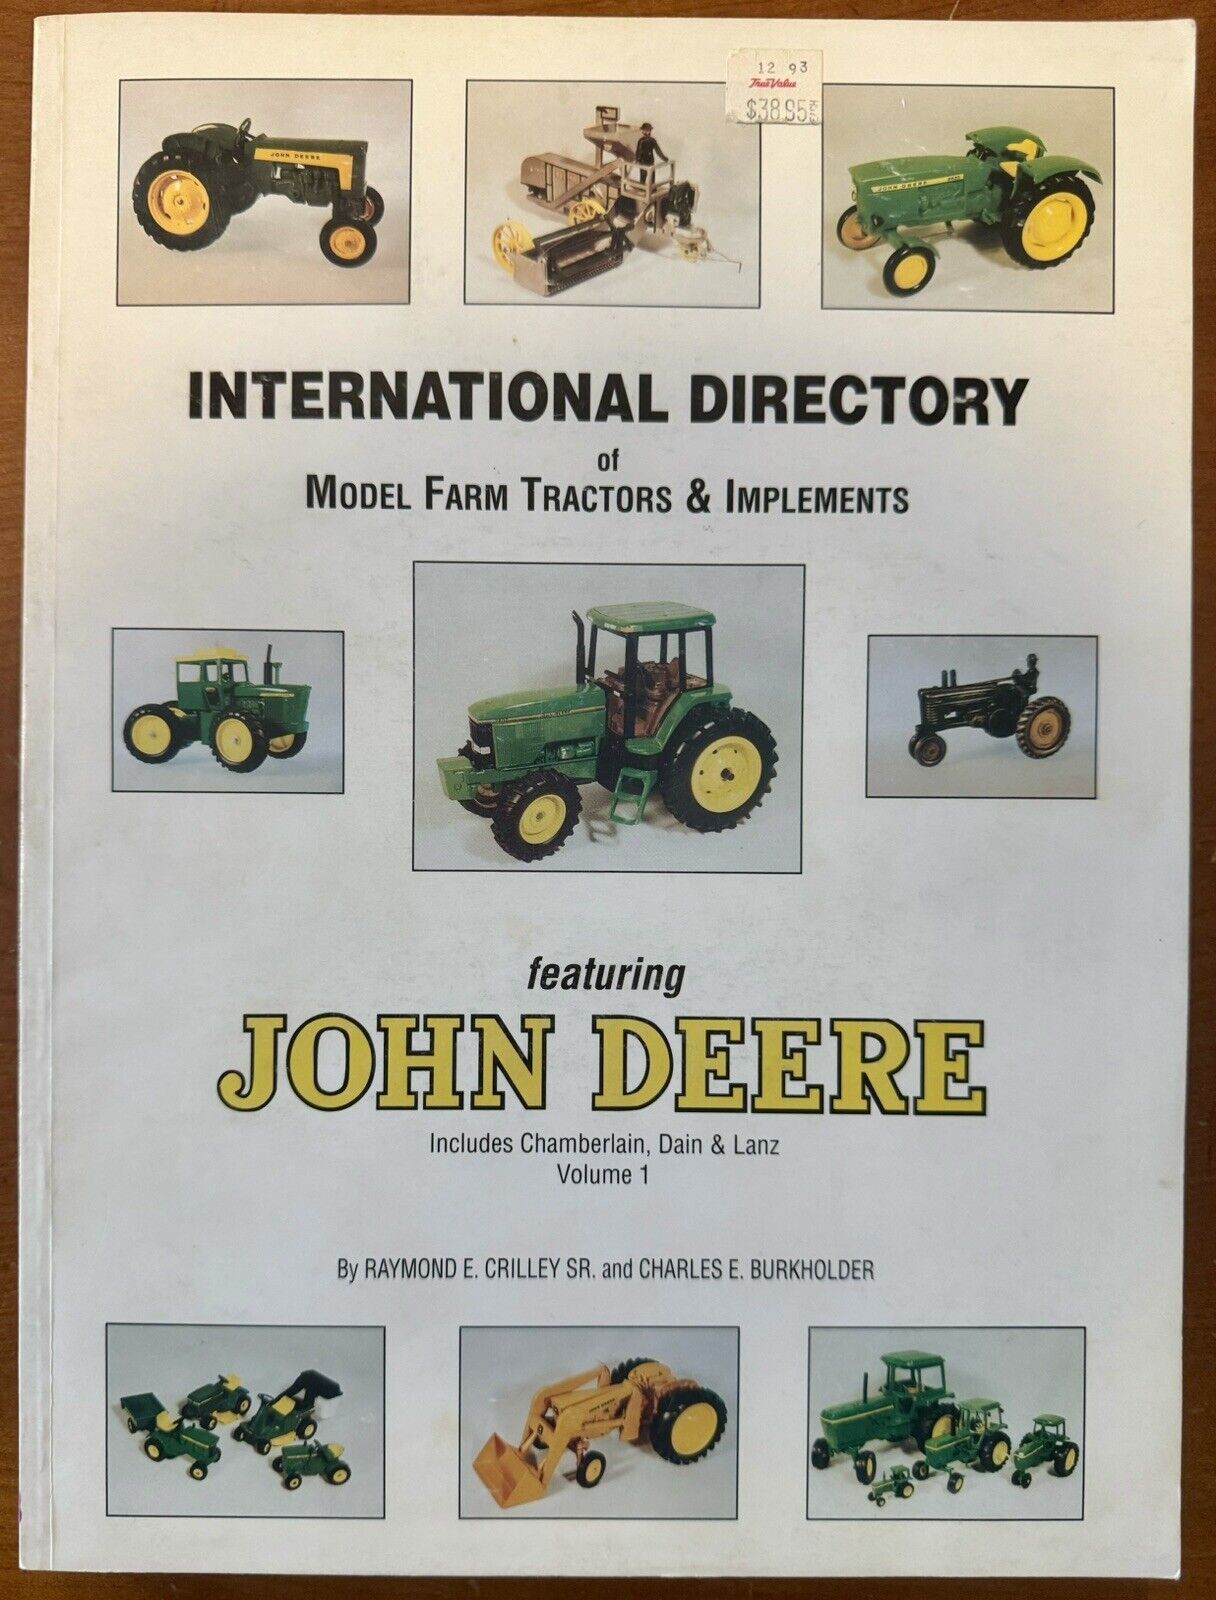 1993 INTERNATIONAL DIRECTORY OF JOHN DEERE MODEL FARM TRACTORS & IMPLEMENTS